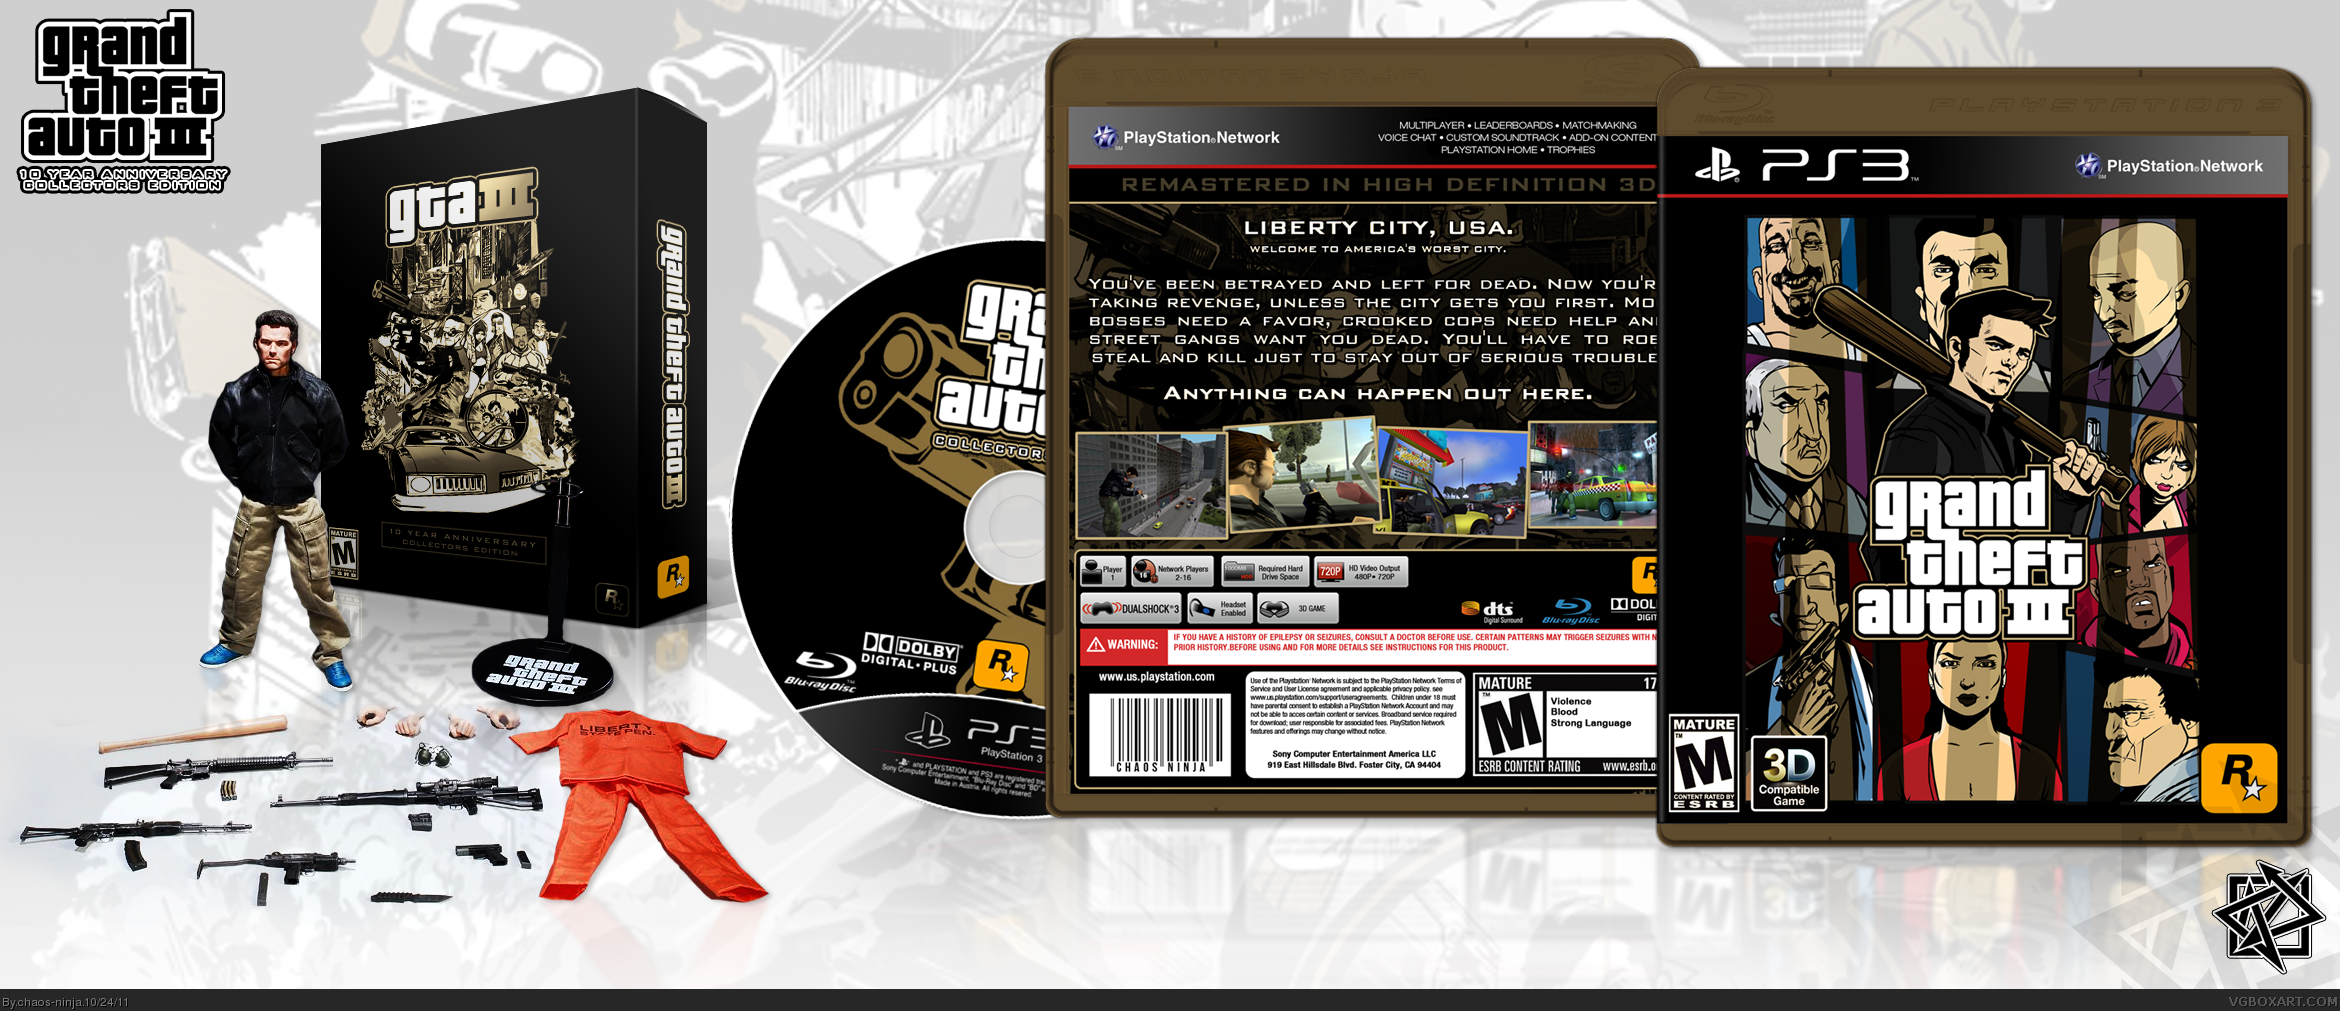 Grand ps3. Grand Theft auto IV коллекционное издание ps3. GTA 3 Collectors Edition. GTA 3 коллекционное издание. Коллекционное издание ГТА 3.